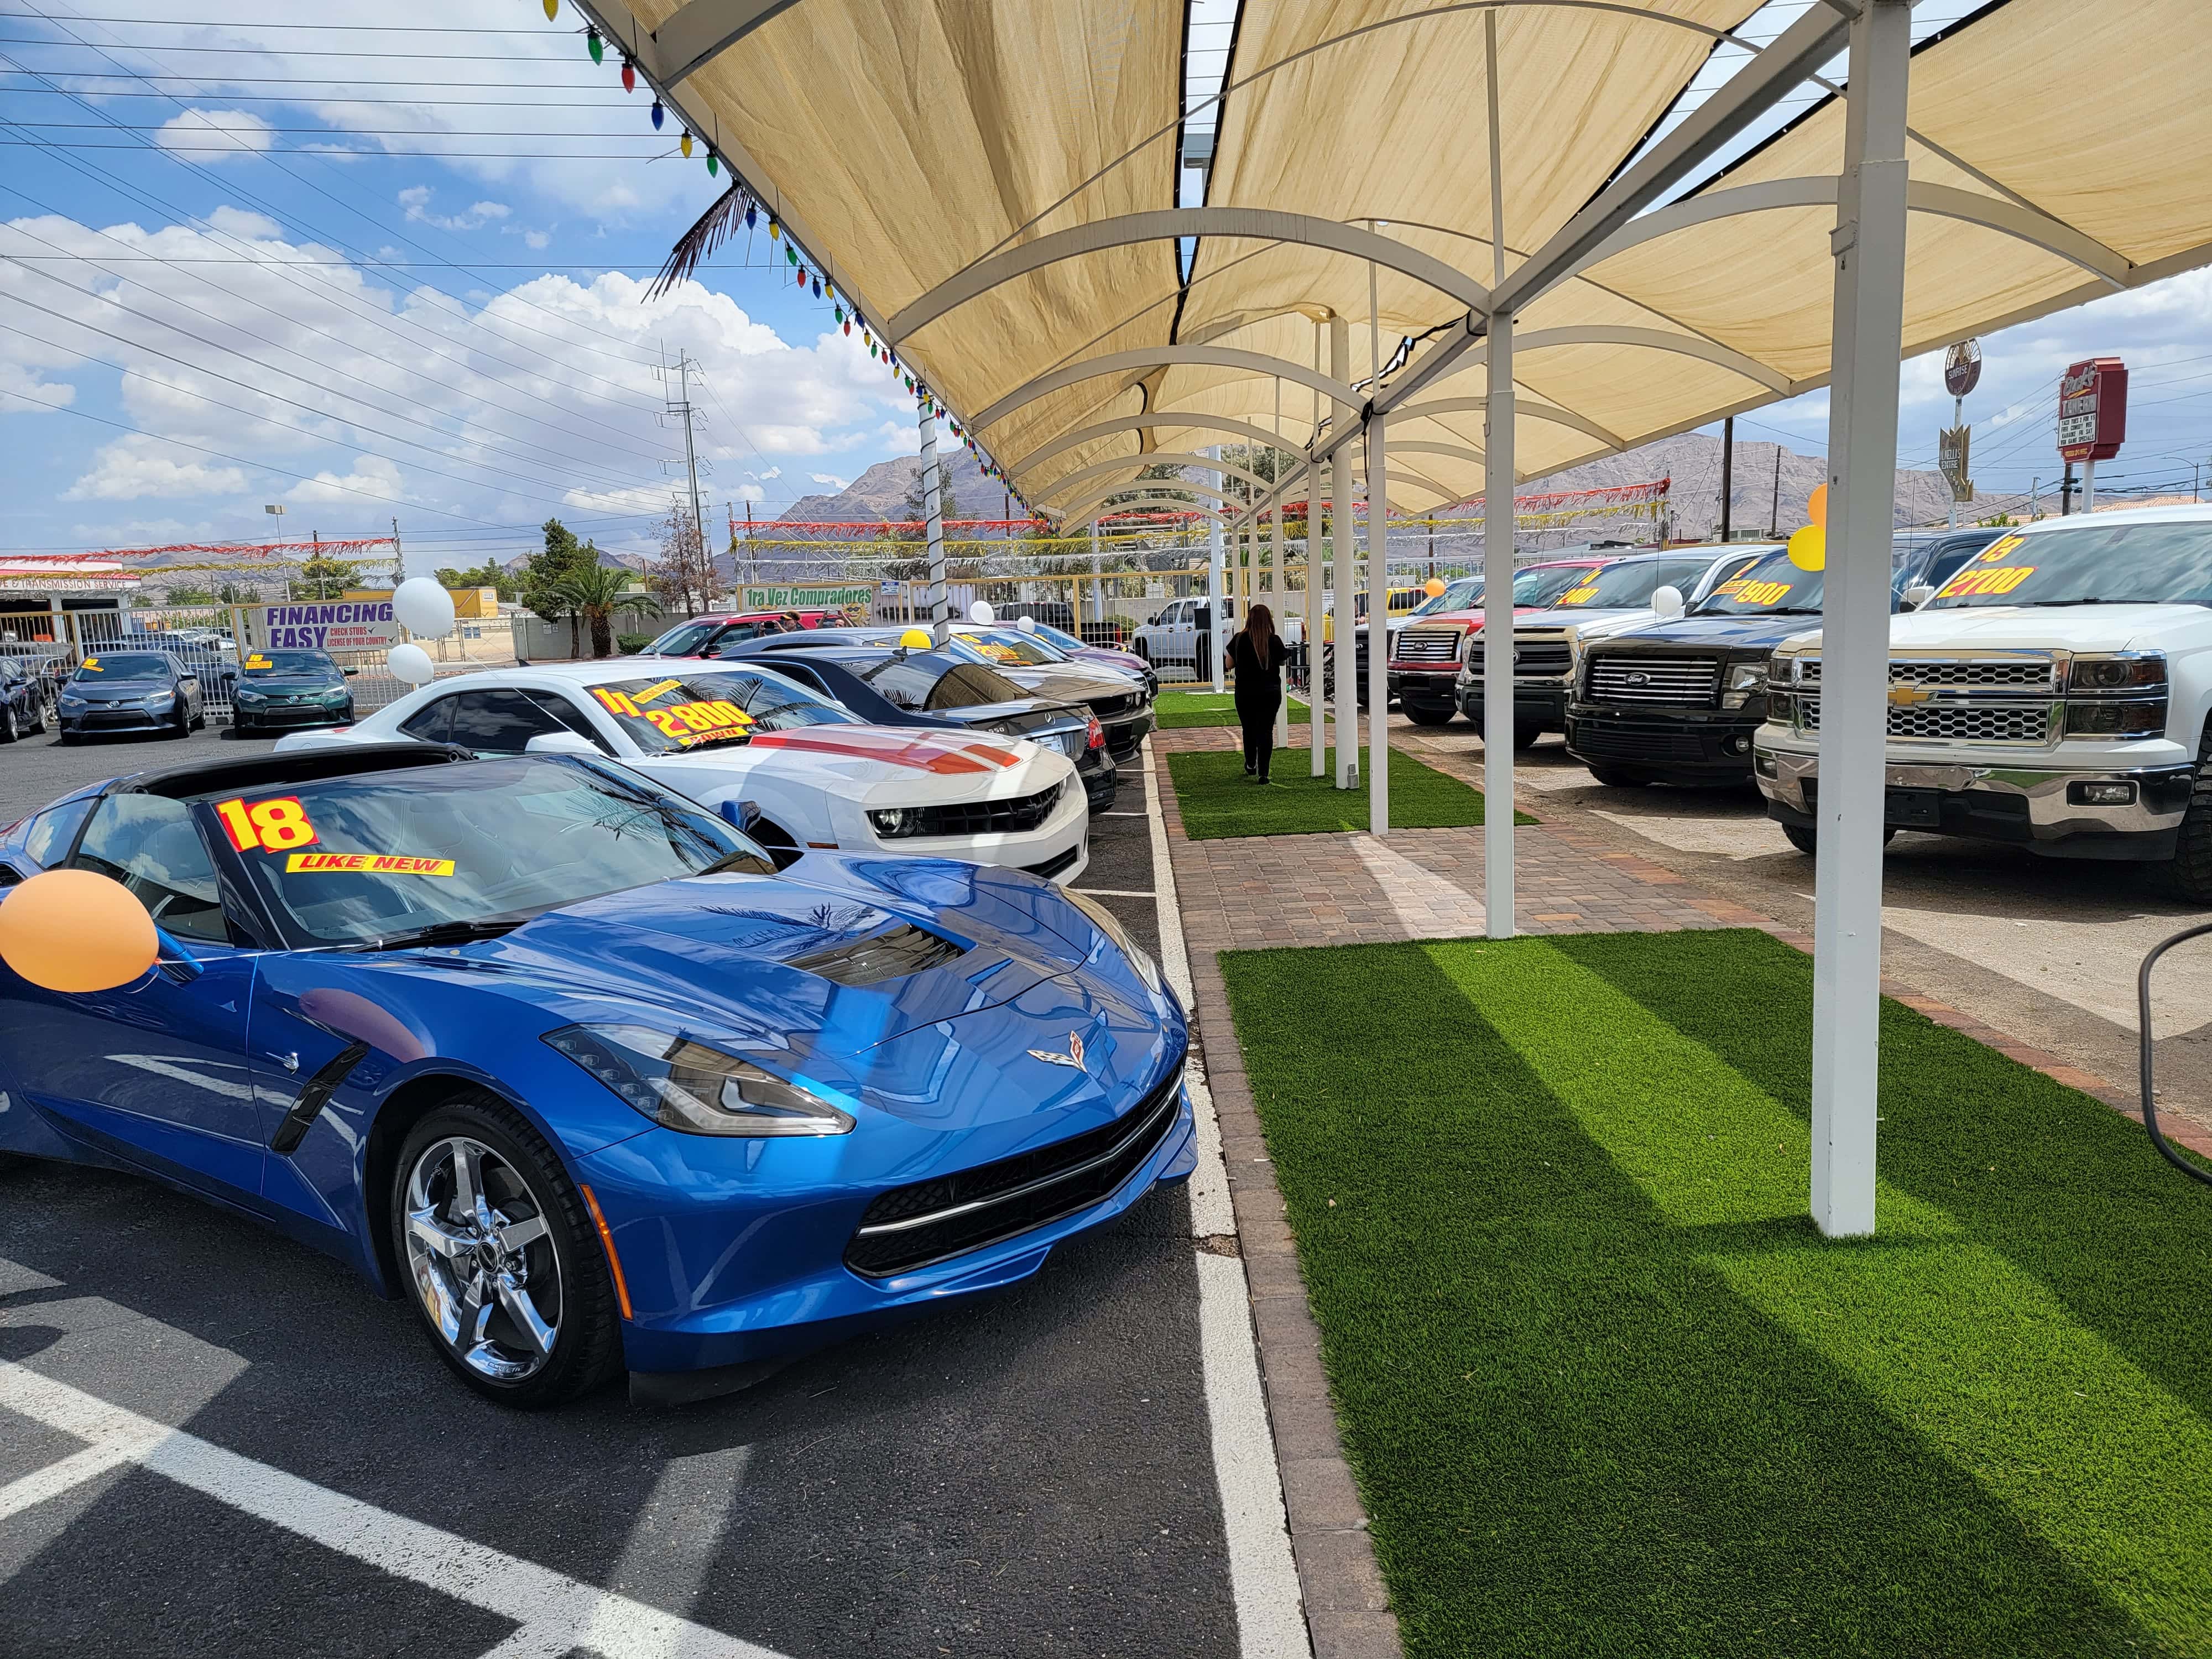 Sunrise Auto Sales - Las Vegas (NV 89110), US, hyundai dealership